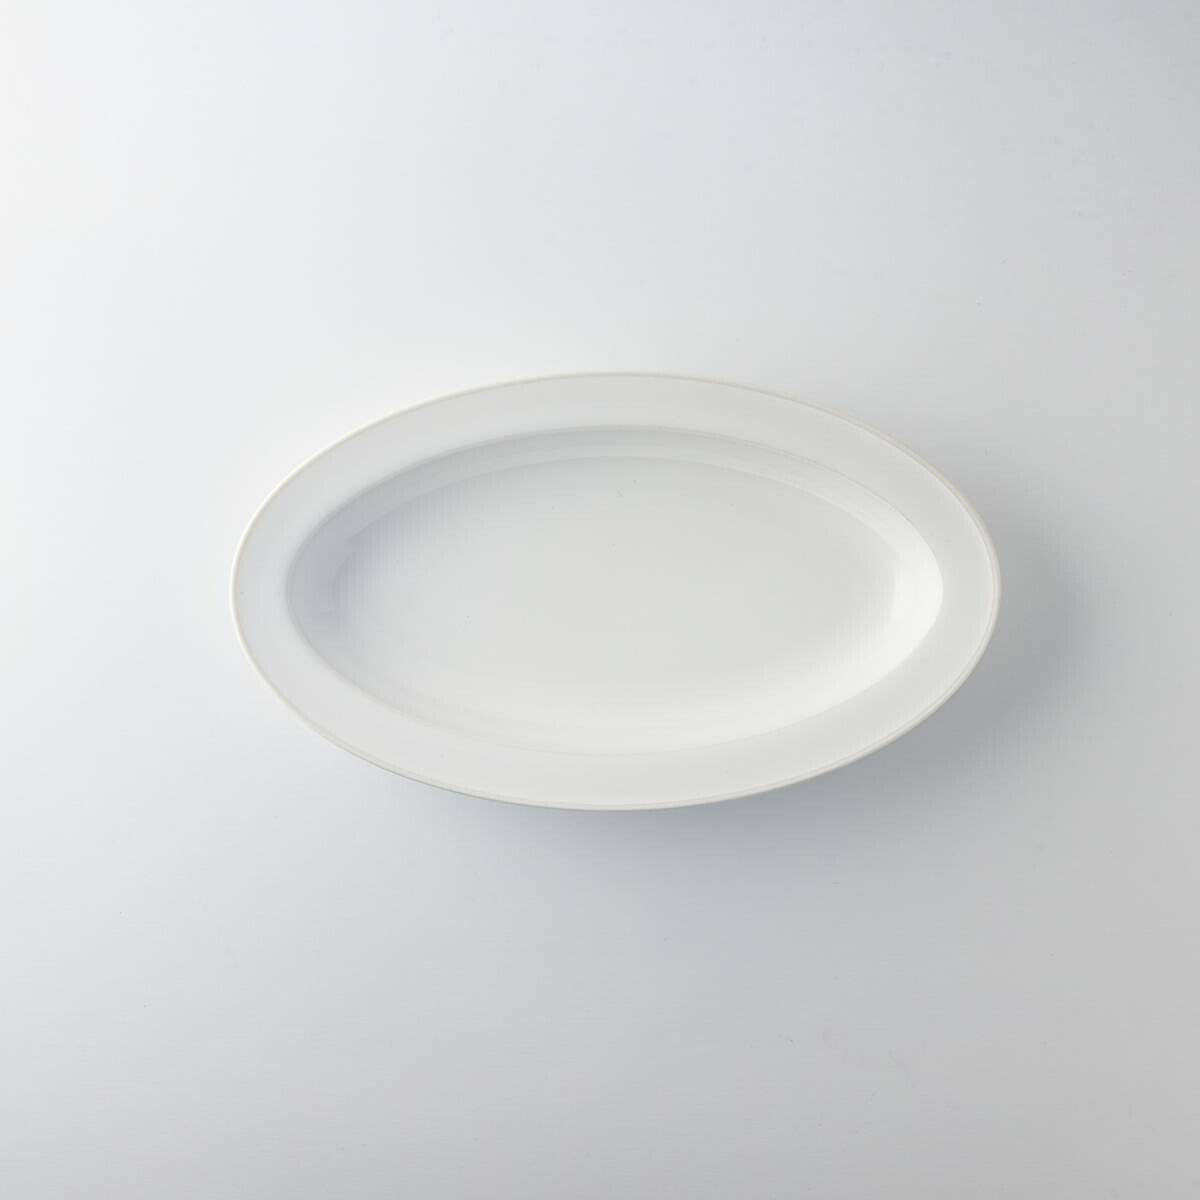 Miyama Racca Oval Poisson Plate/ Deep Dish